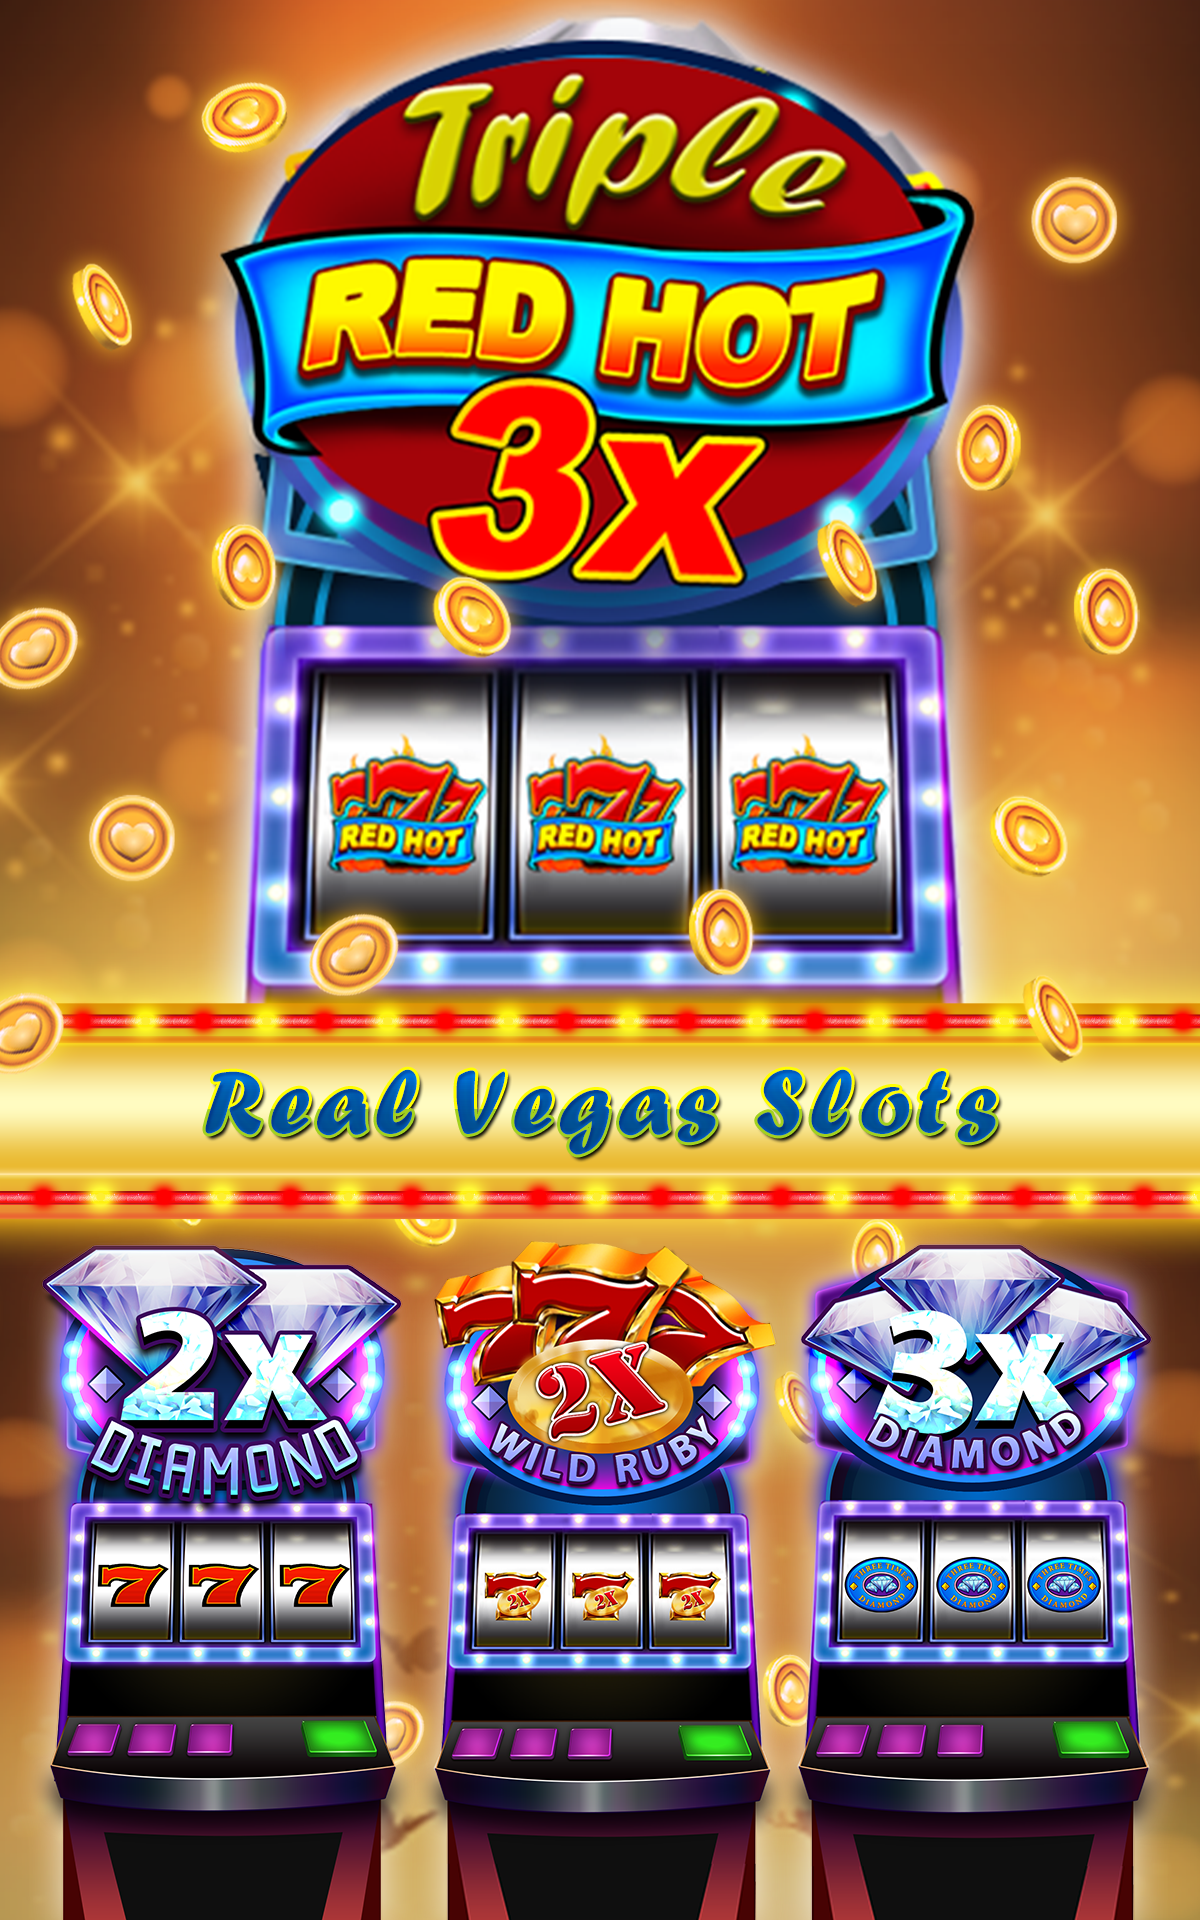 Triple stars slot machine jackpot results